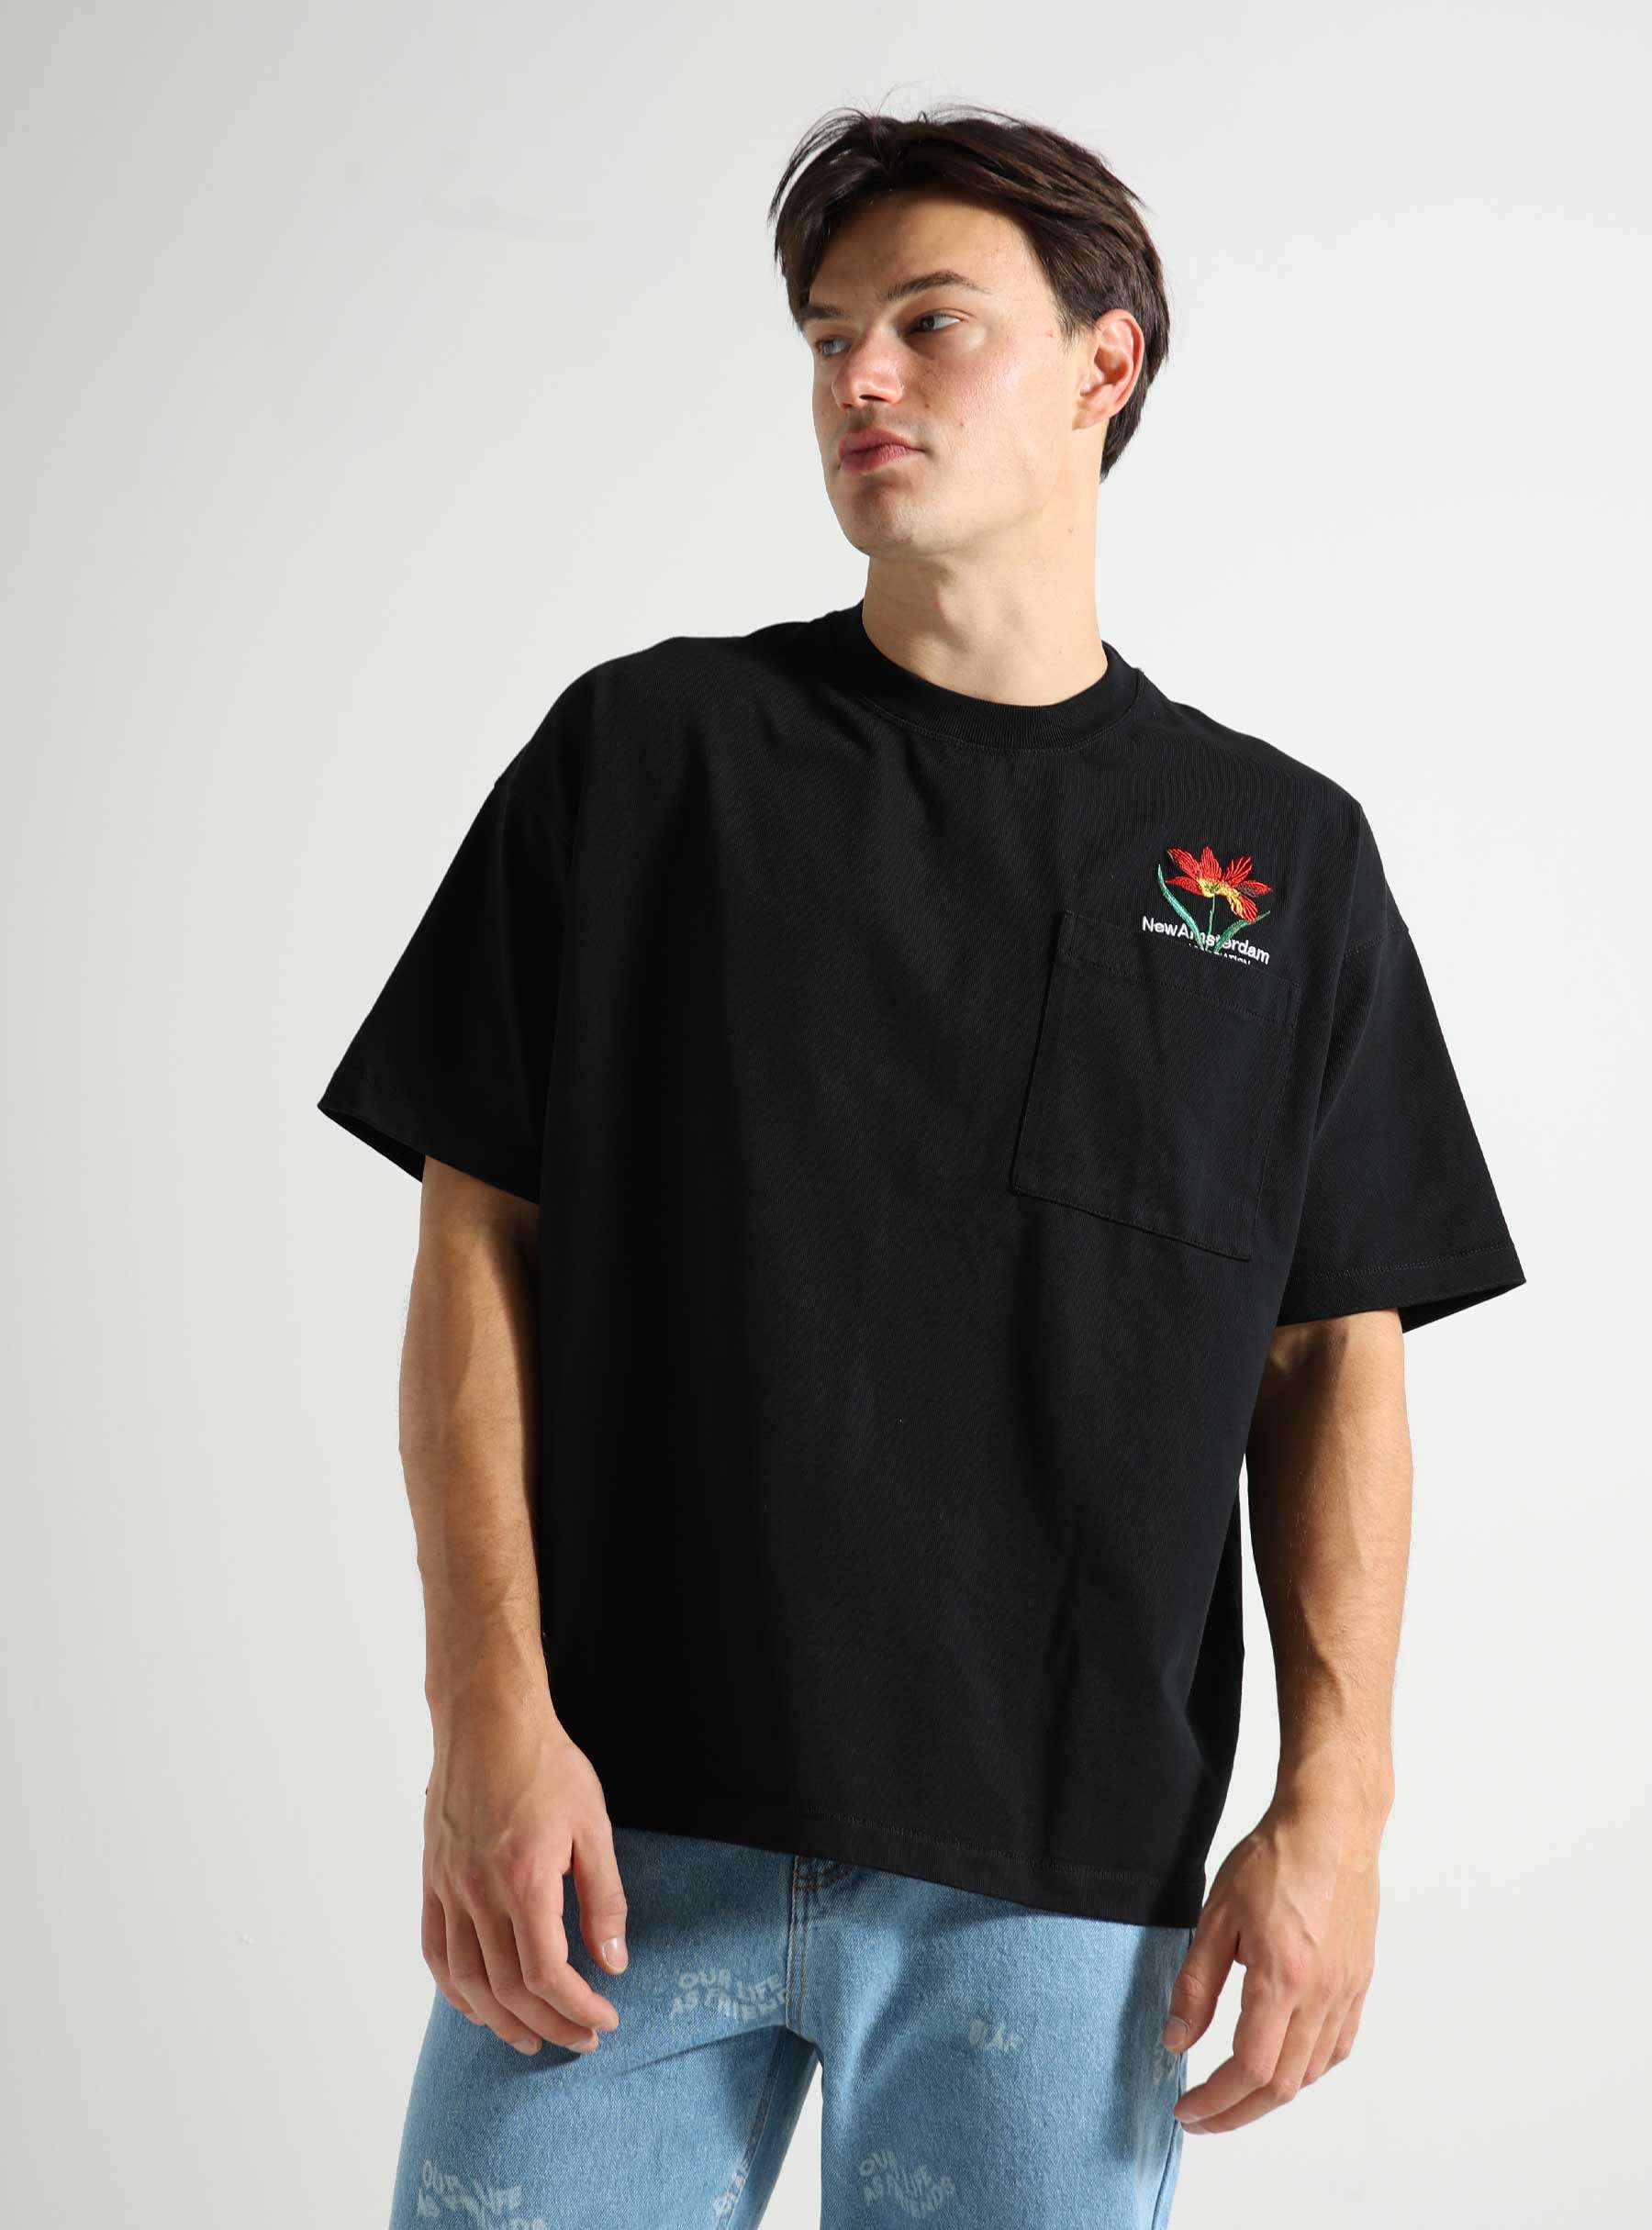 Waxed Tulip T-shirt Black 2401095005